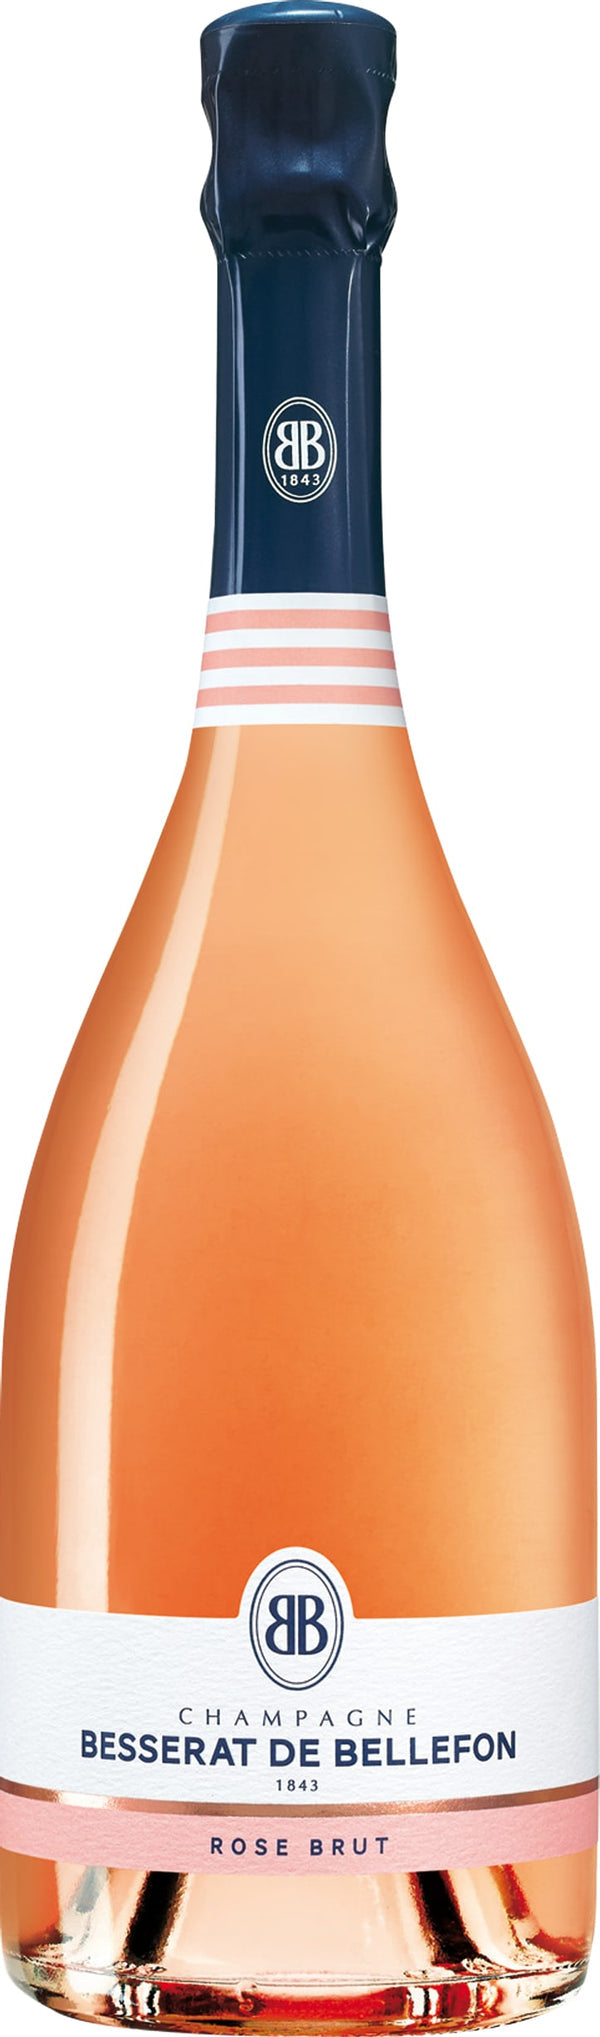 Champagne Besserat De Bellefon Rose Brut NV NV6x75cl - Just Wines 